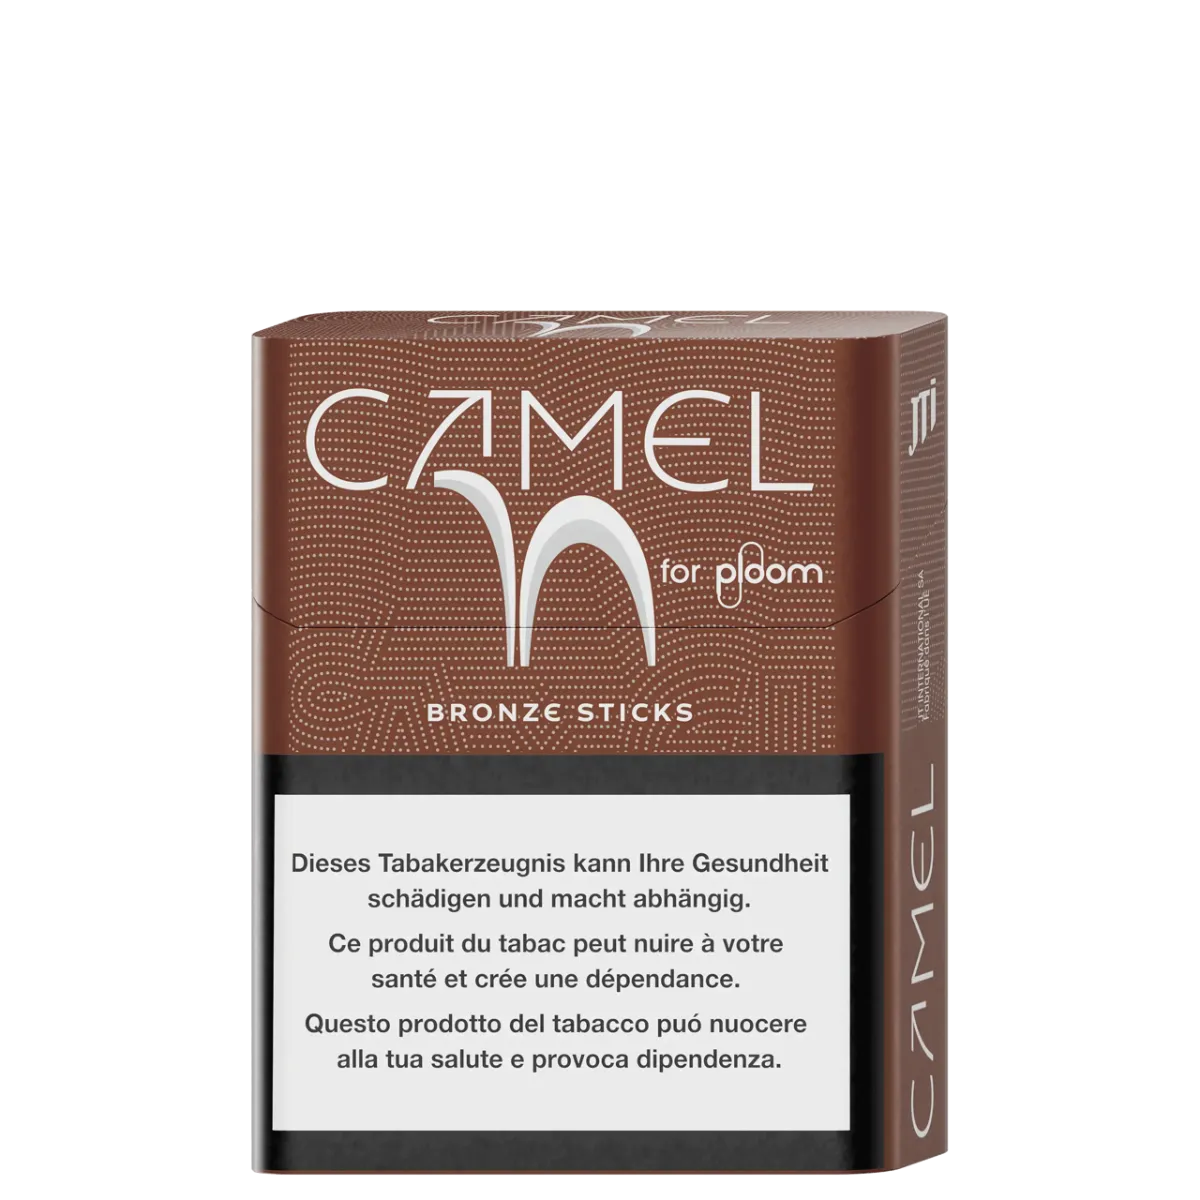 Camel Bronze sticks for Ploom pack
